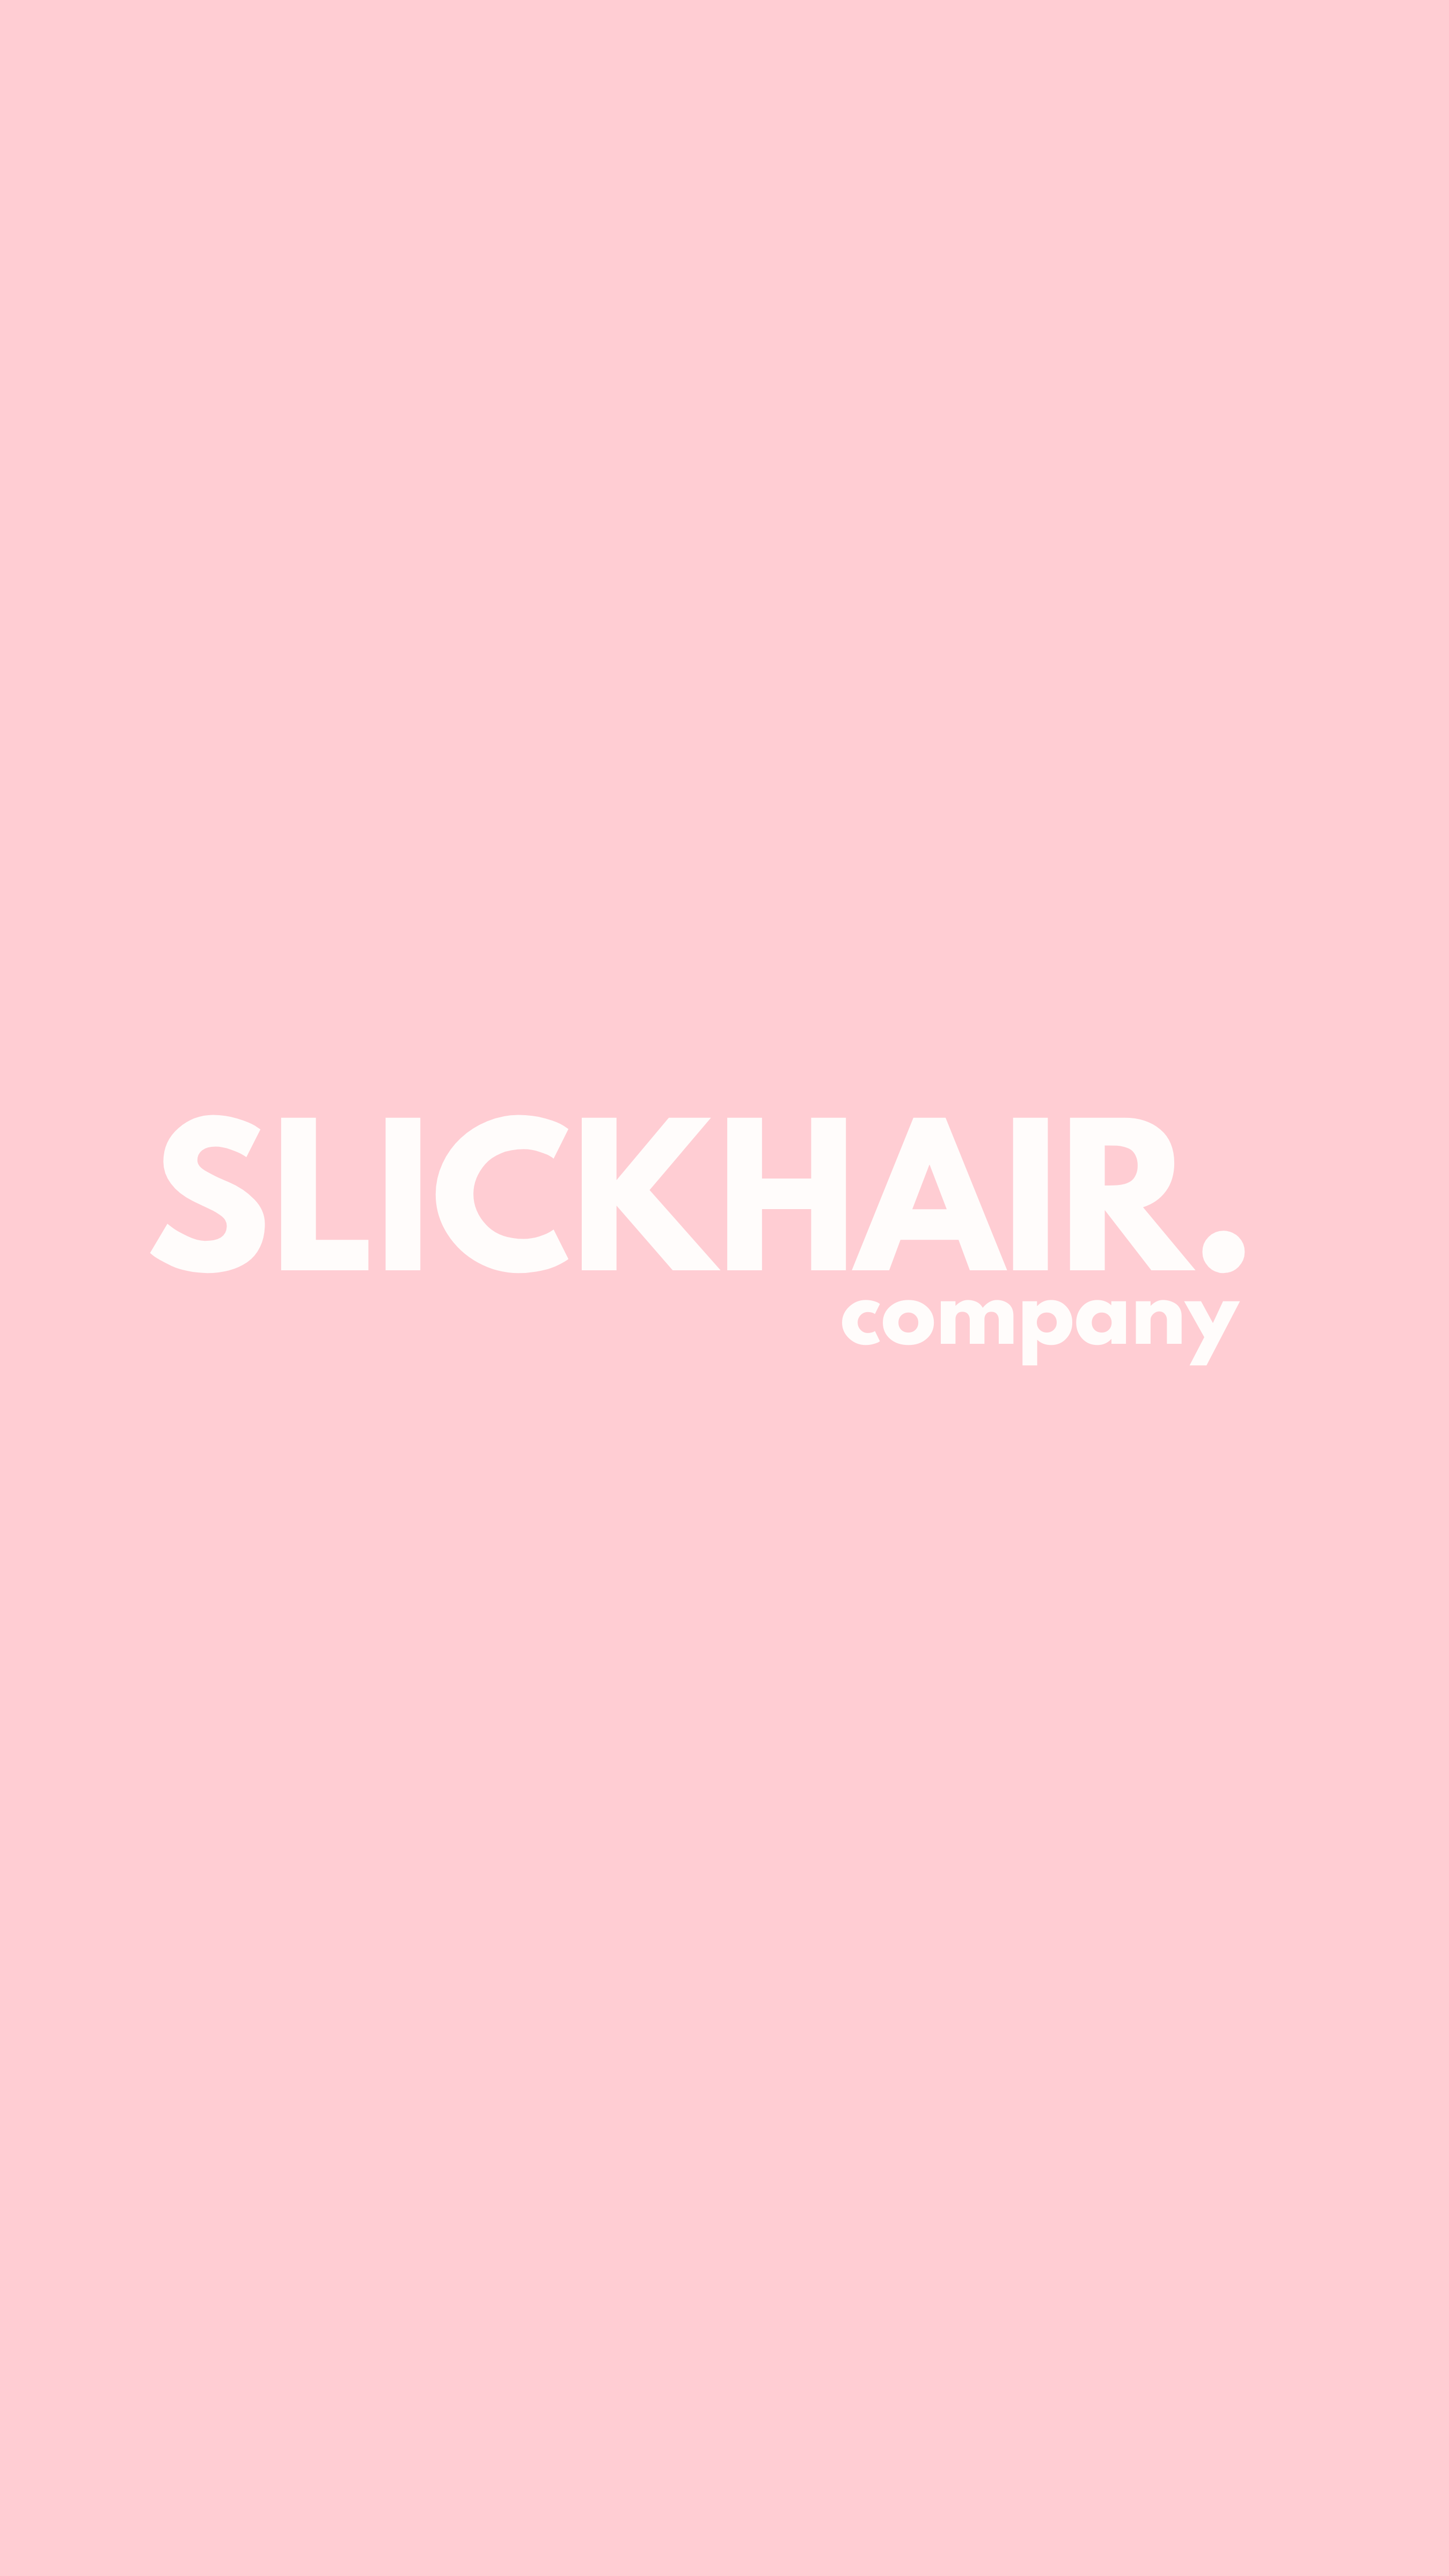 Grip Clips  Slick Hair Company Australia